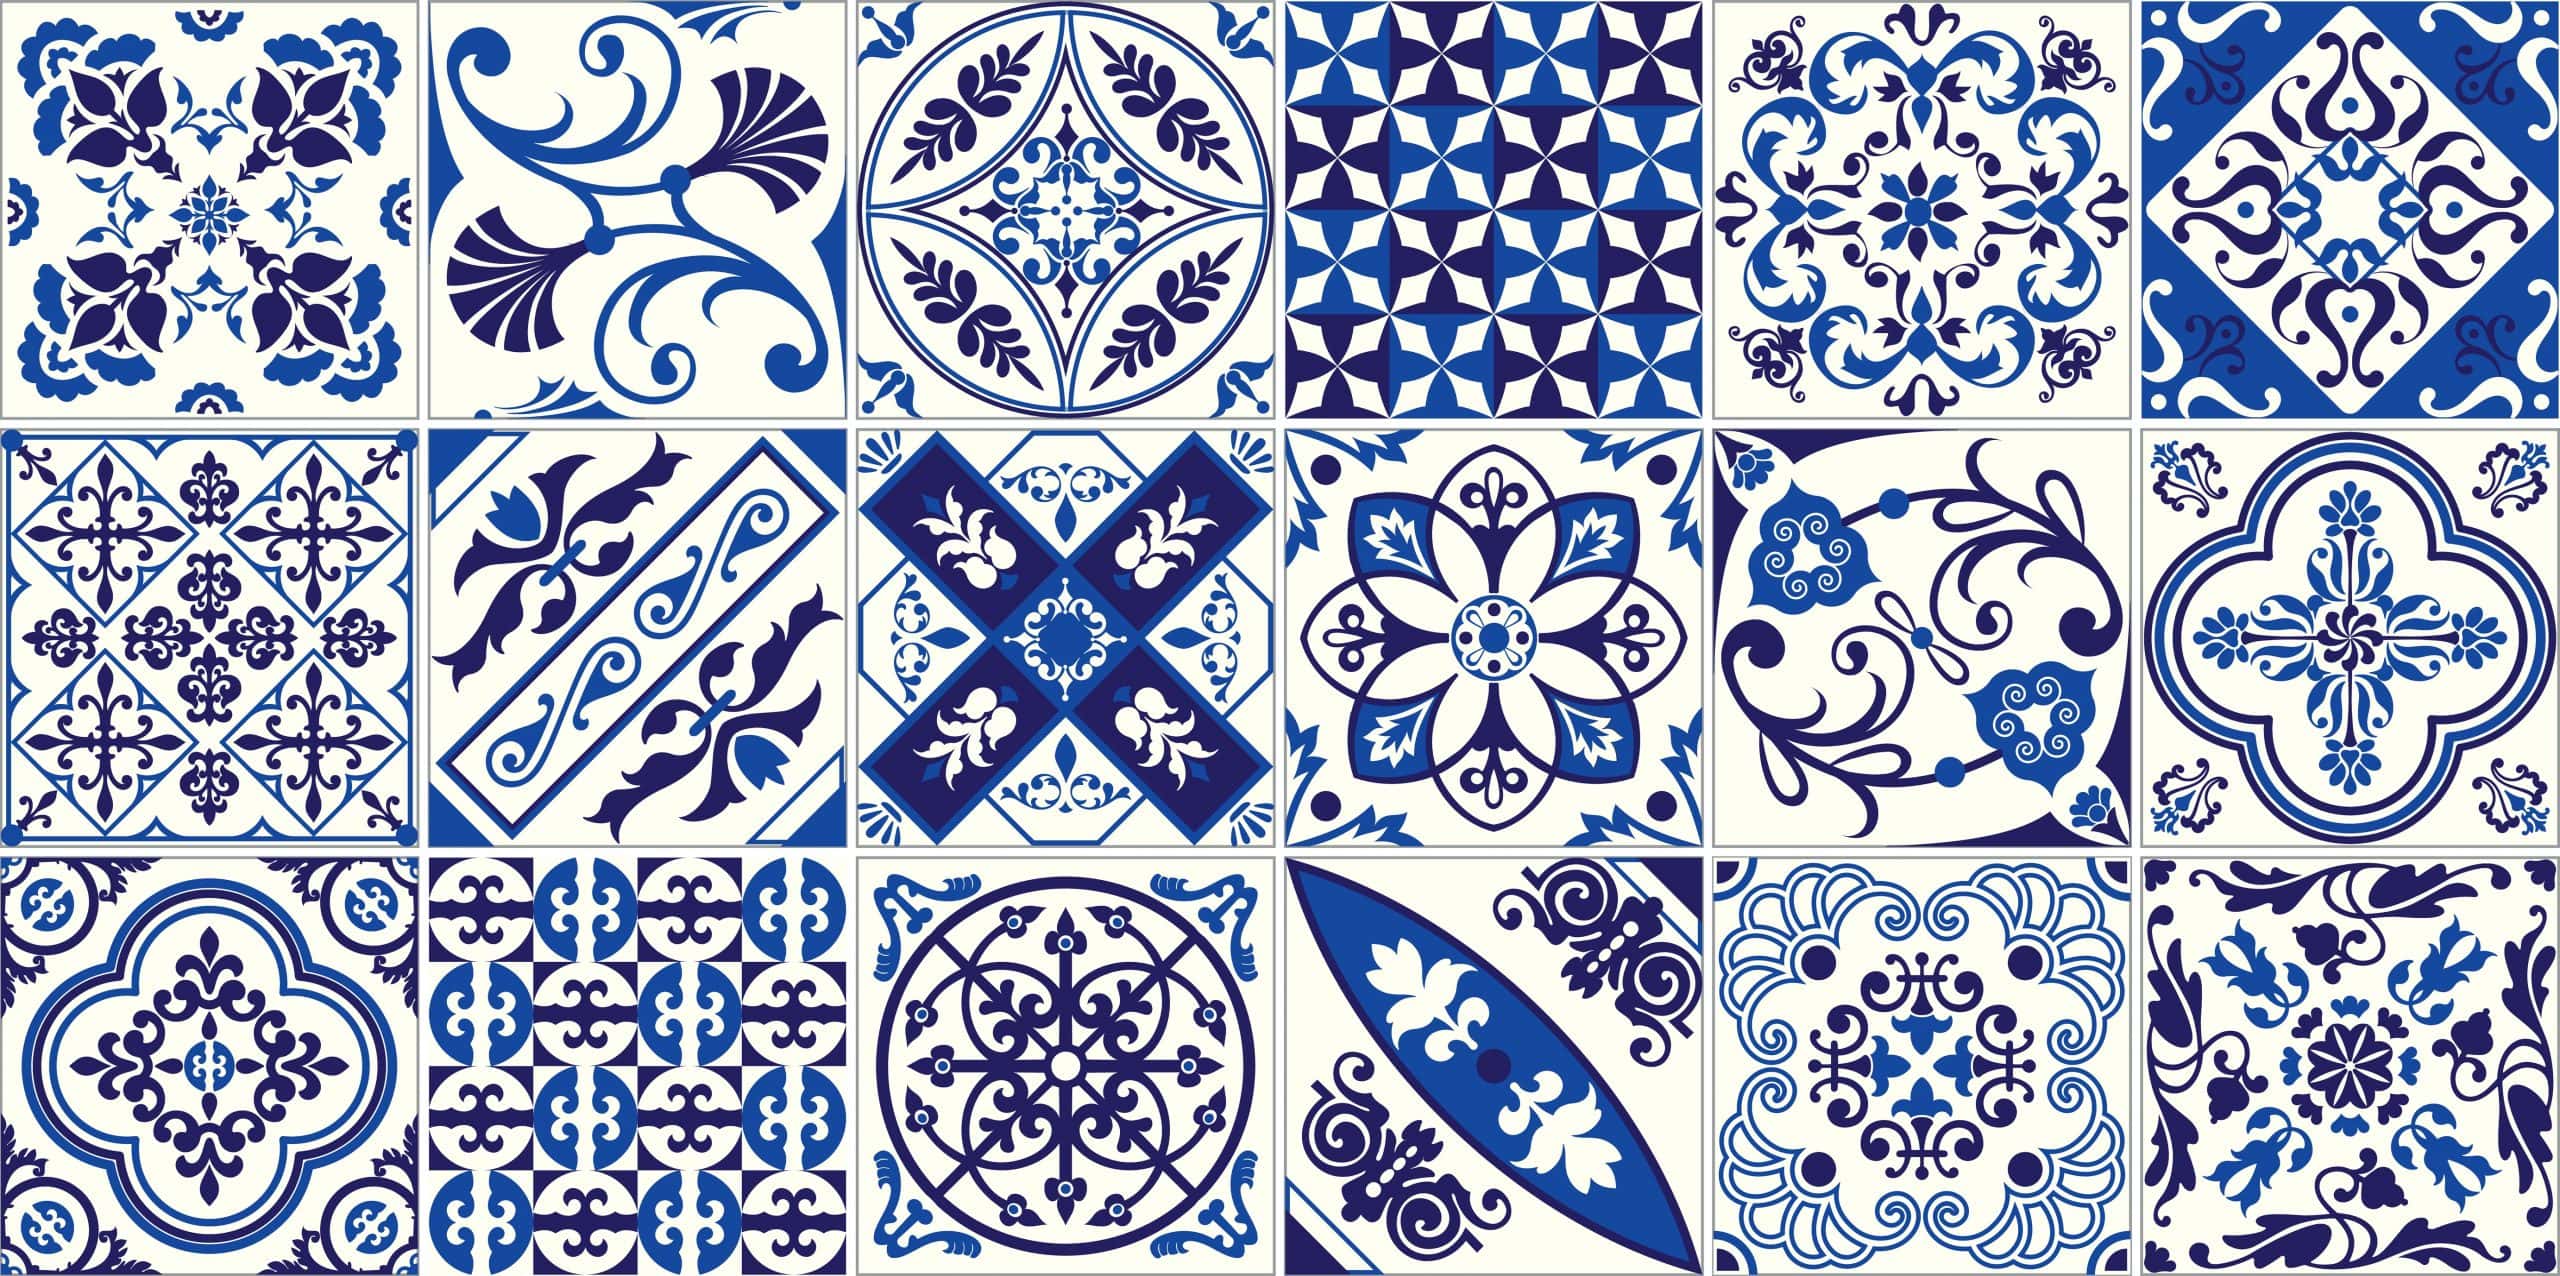 jewel-patterned tiles